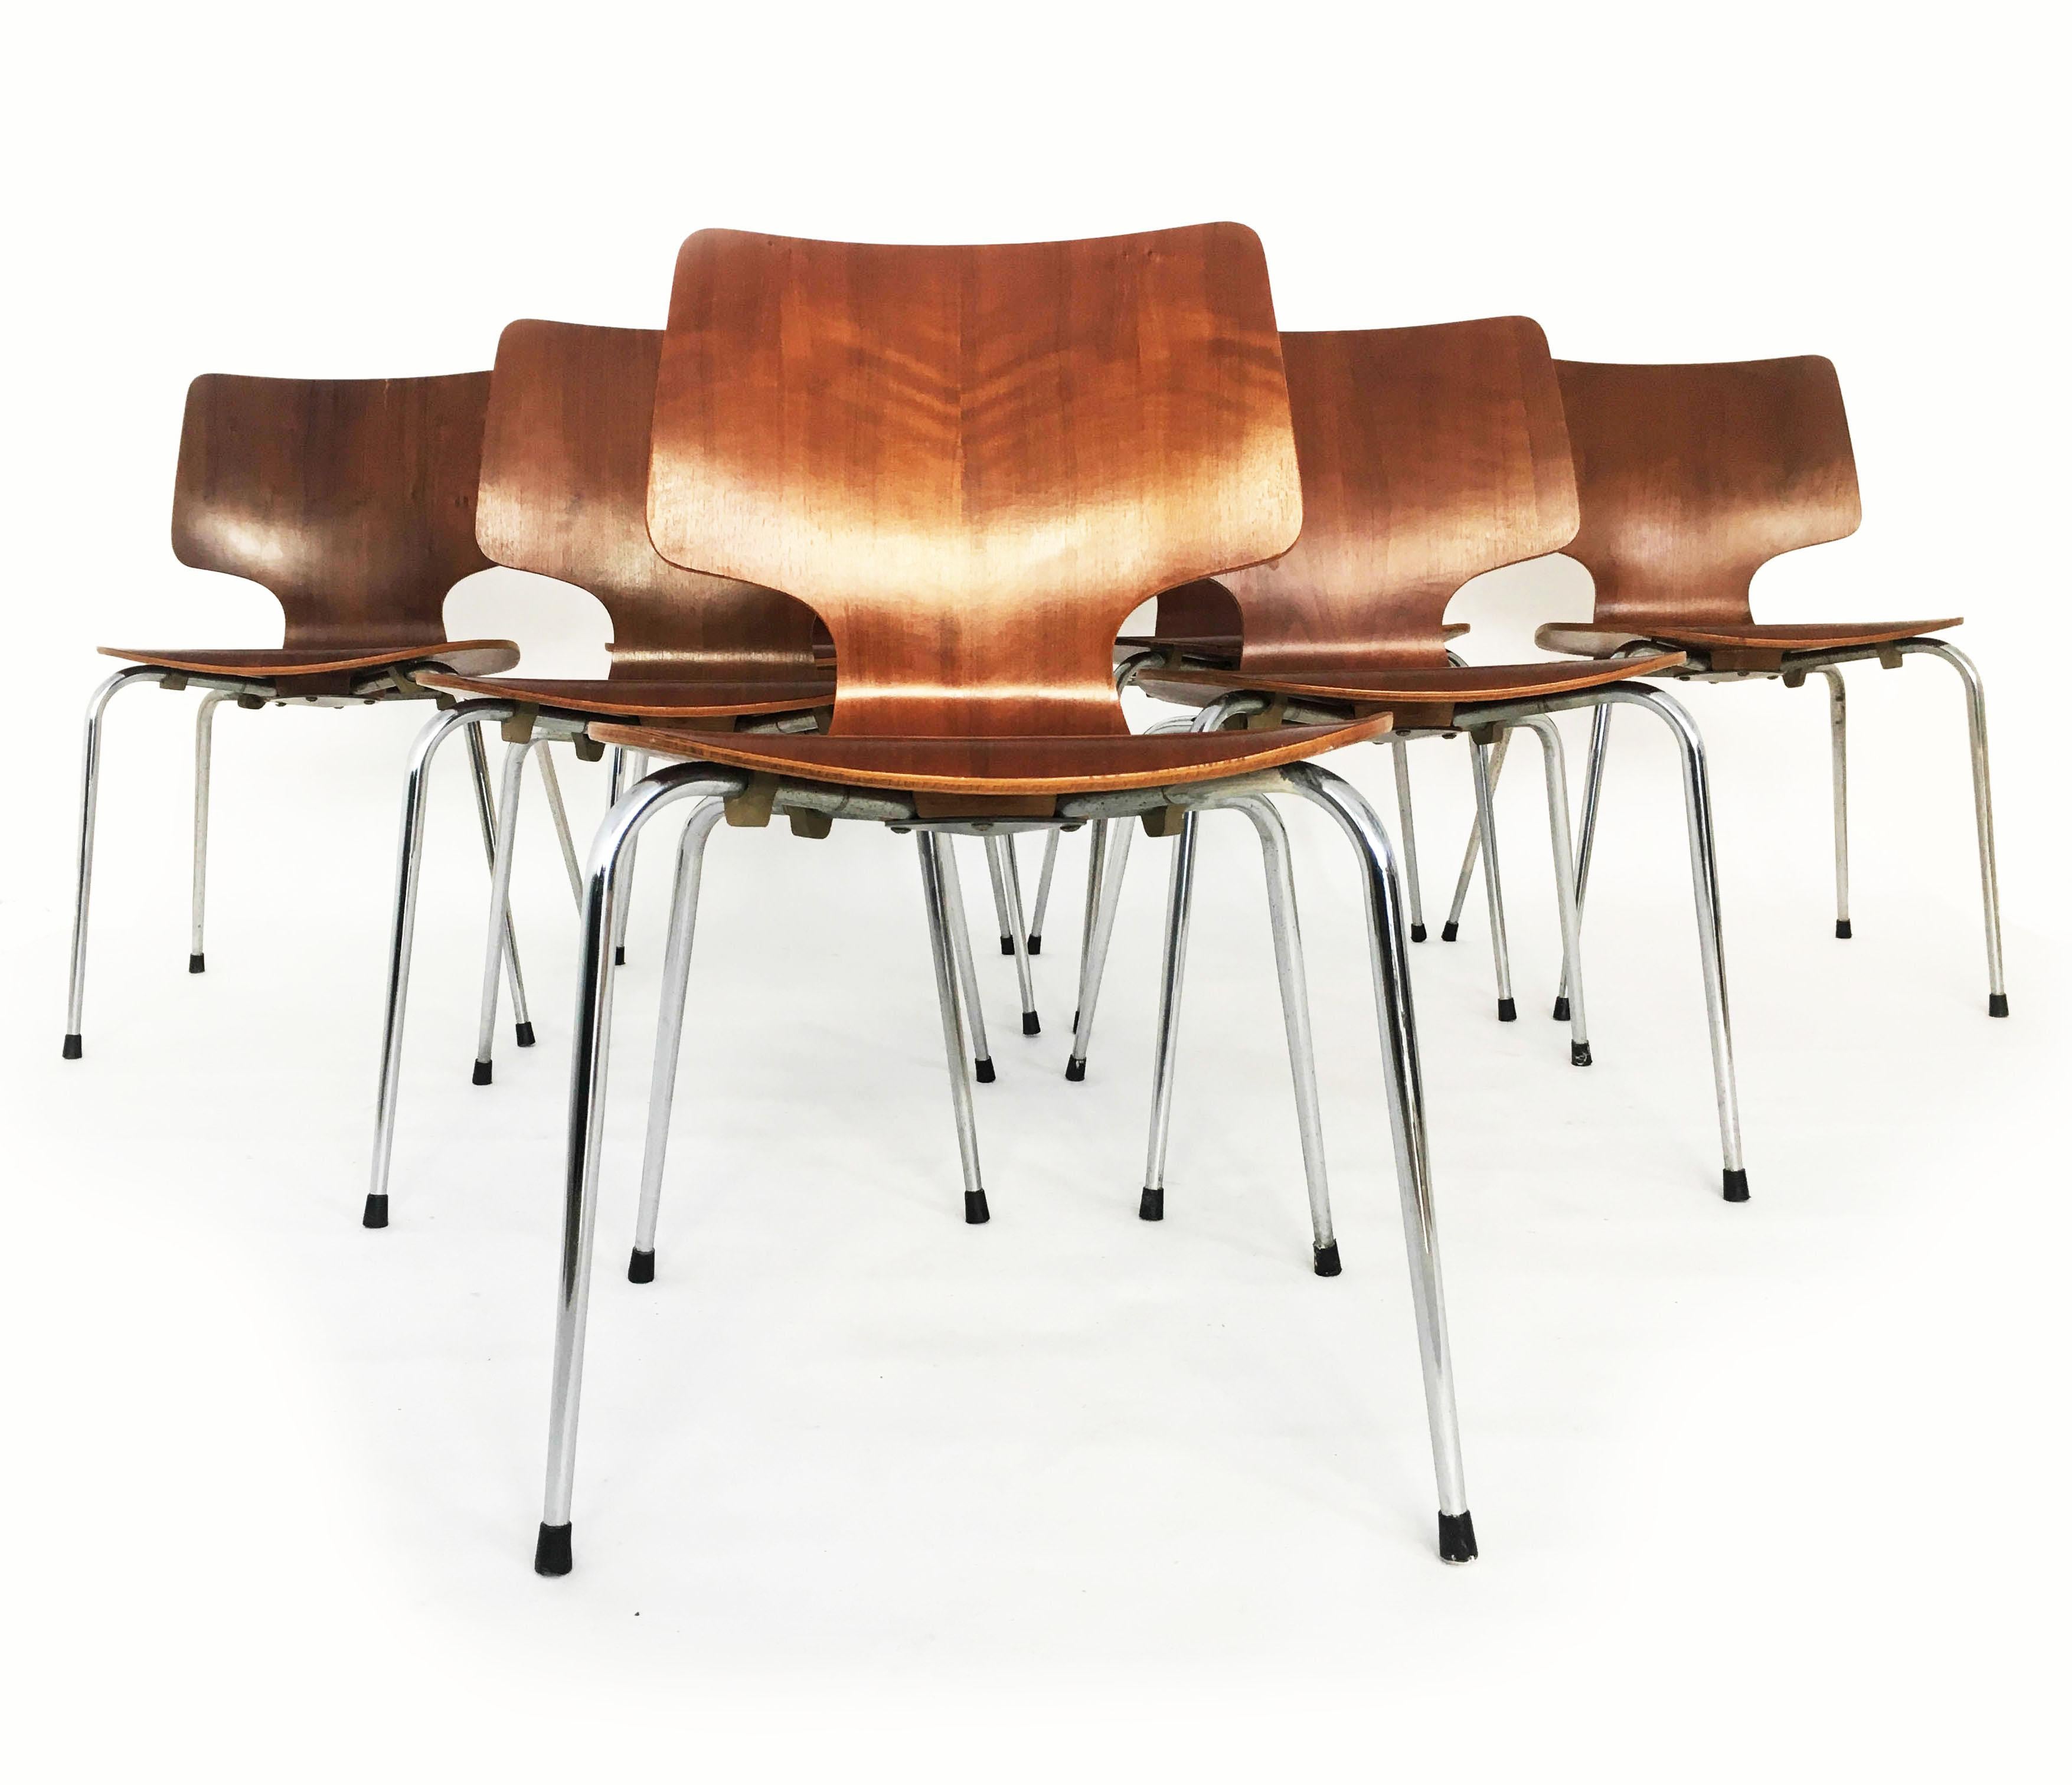 Mid-20th Century Danish Modern Teak Dining Chairs, Set of Seven, Denmark 1960s For Sale